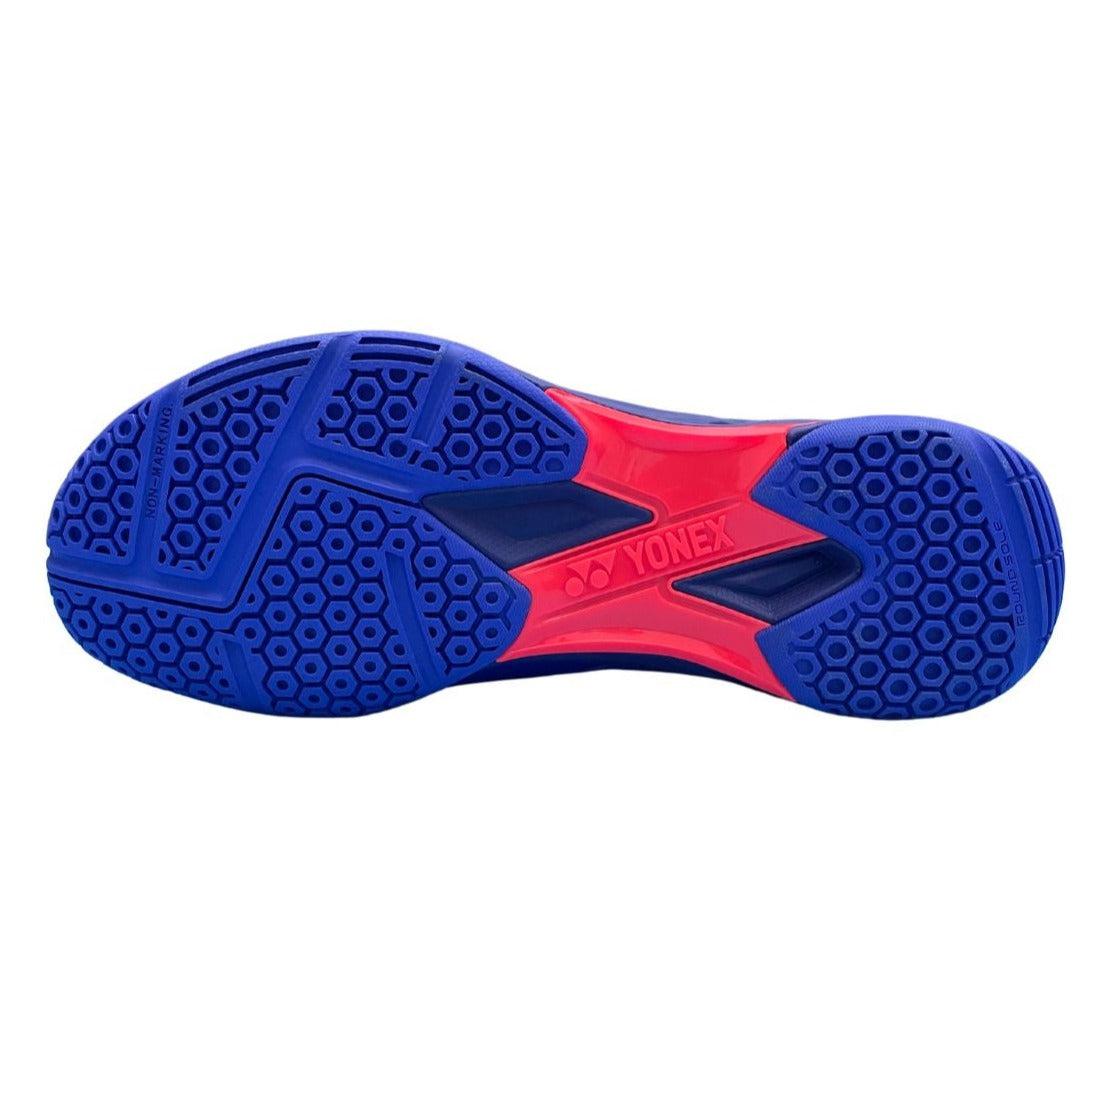 Yonex Power Cushion 57 - Royal Blue-Badminton Shoes-Pro Sports